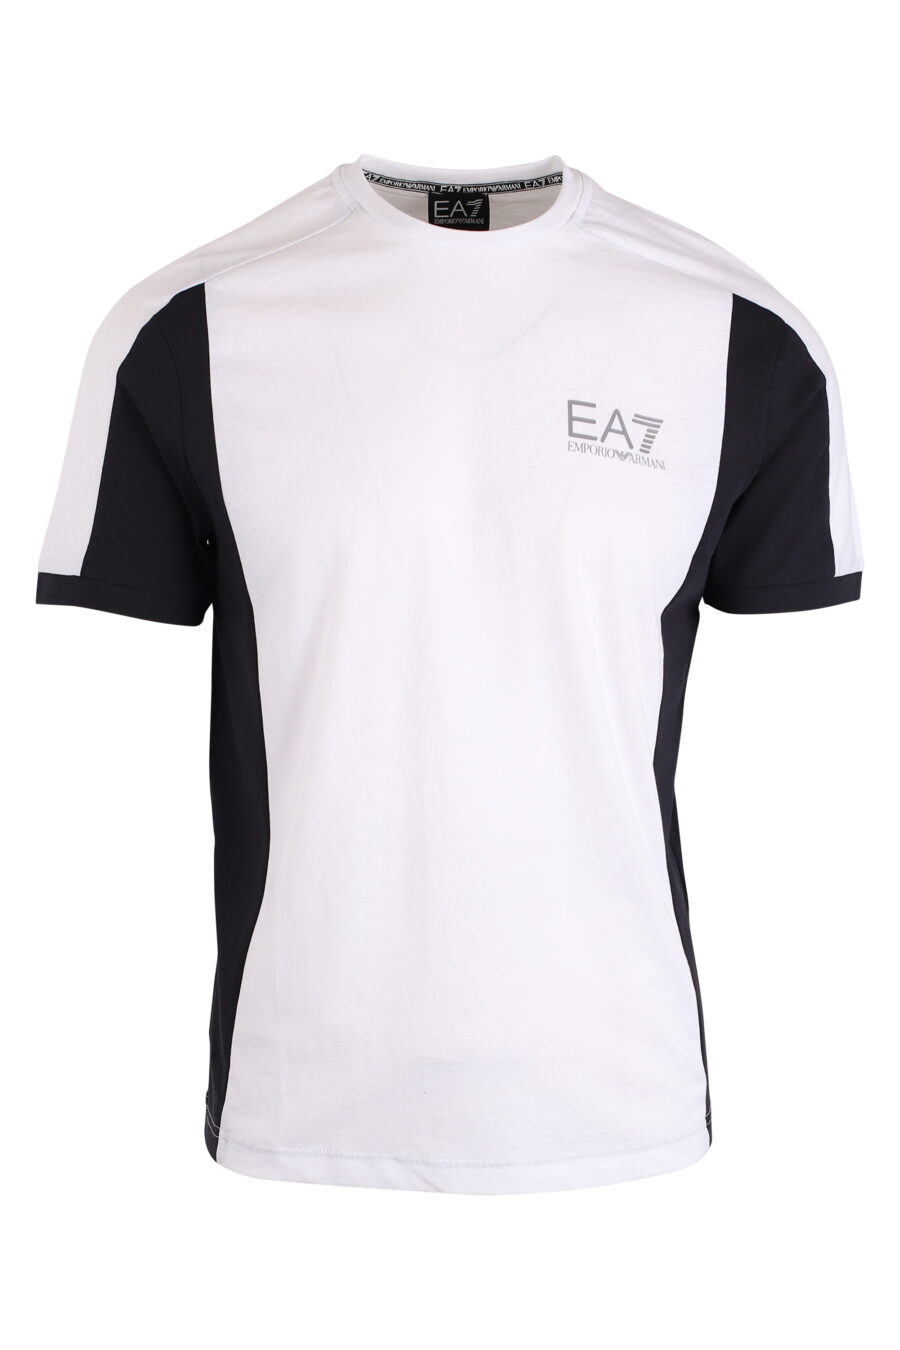 Weißes T-Shirt mit Mini-Logo "lux identity" - IMG 4203